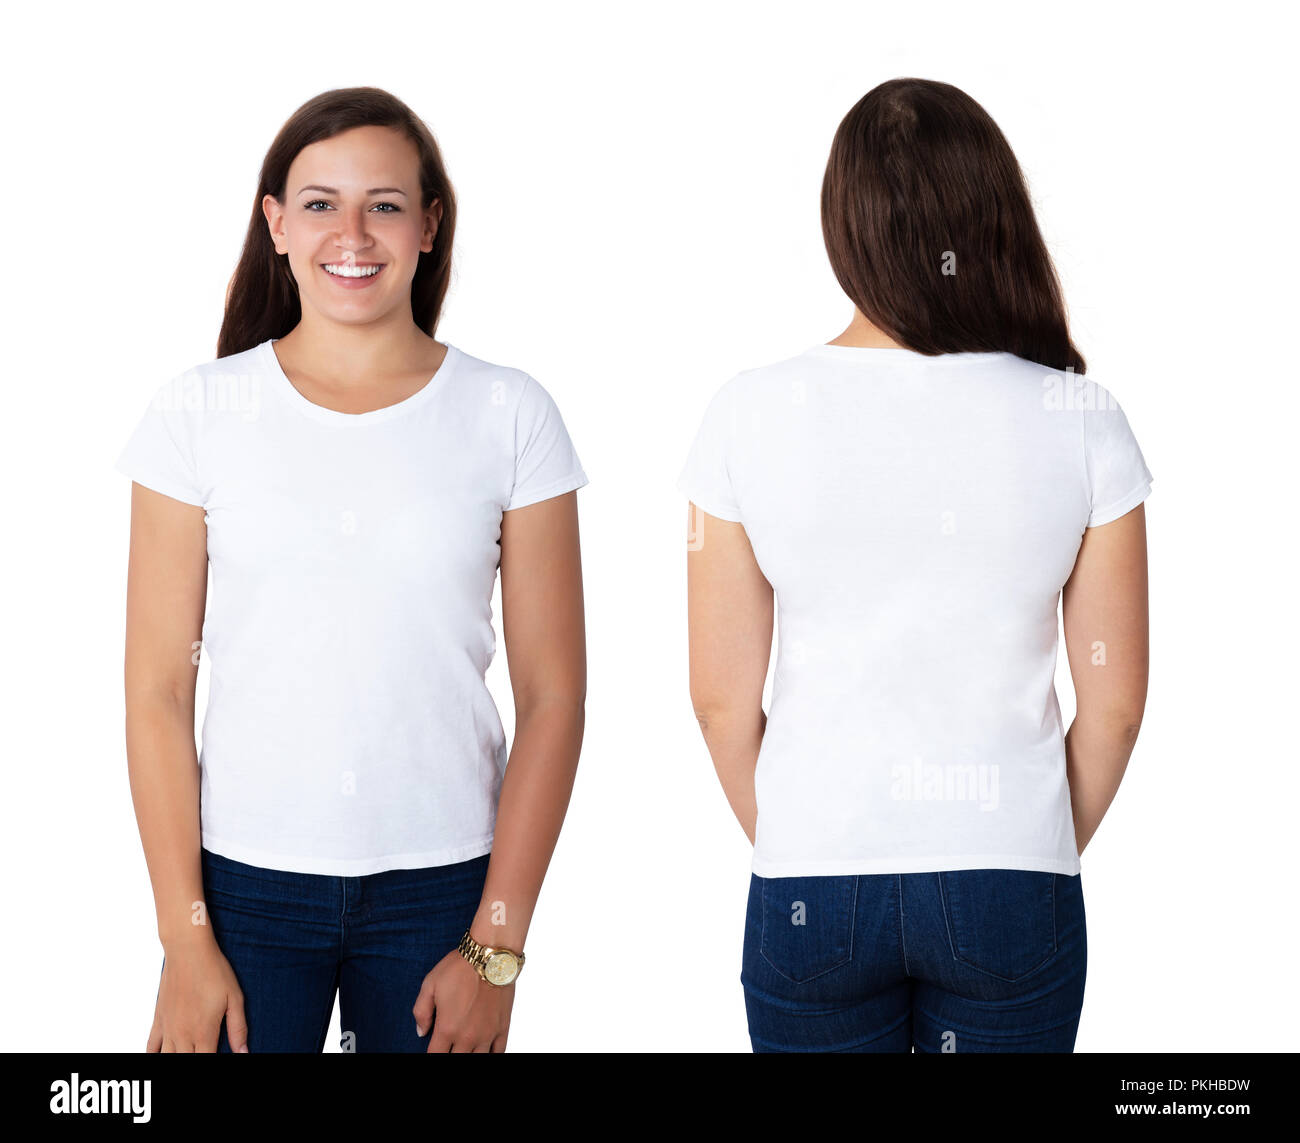 arrojar polvo en los ojos obispo Debería Front And Rear View Of A Happy Woman In Blank White T-shirt Stock Photo -  Alamy